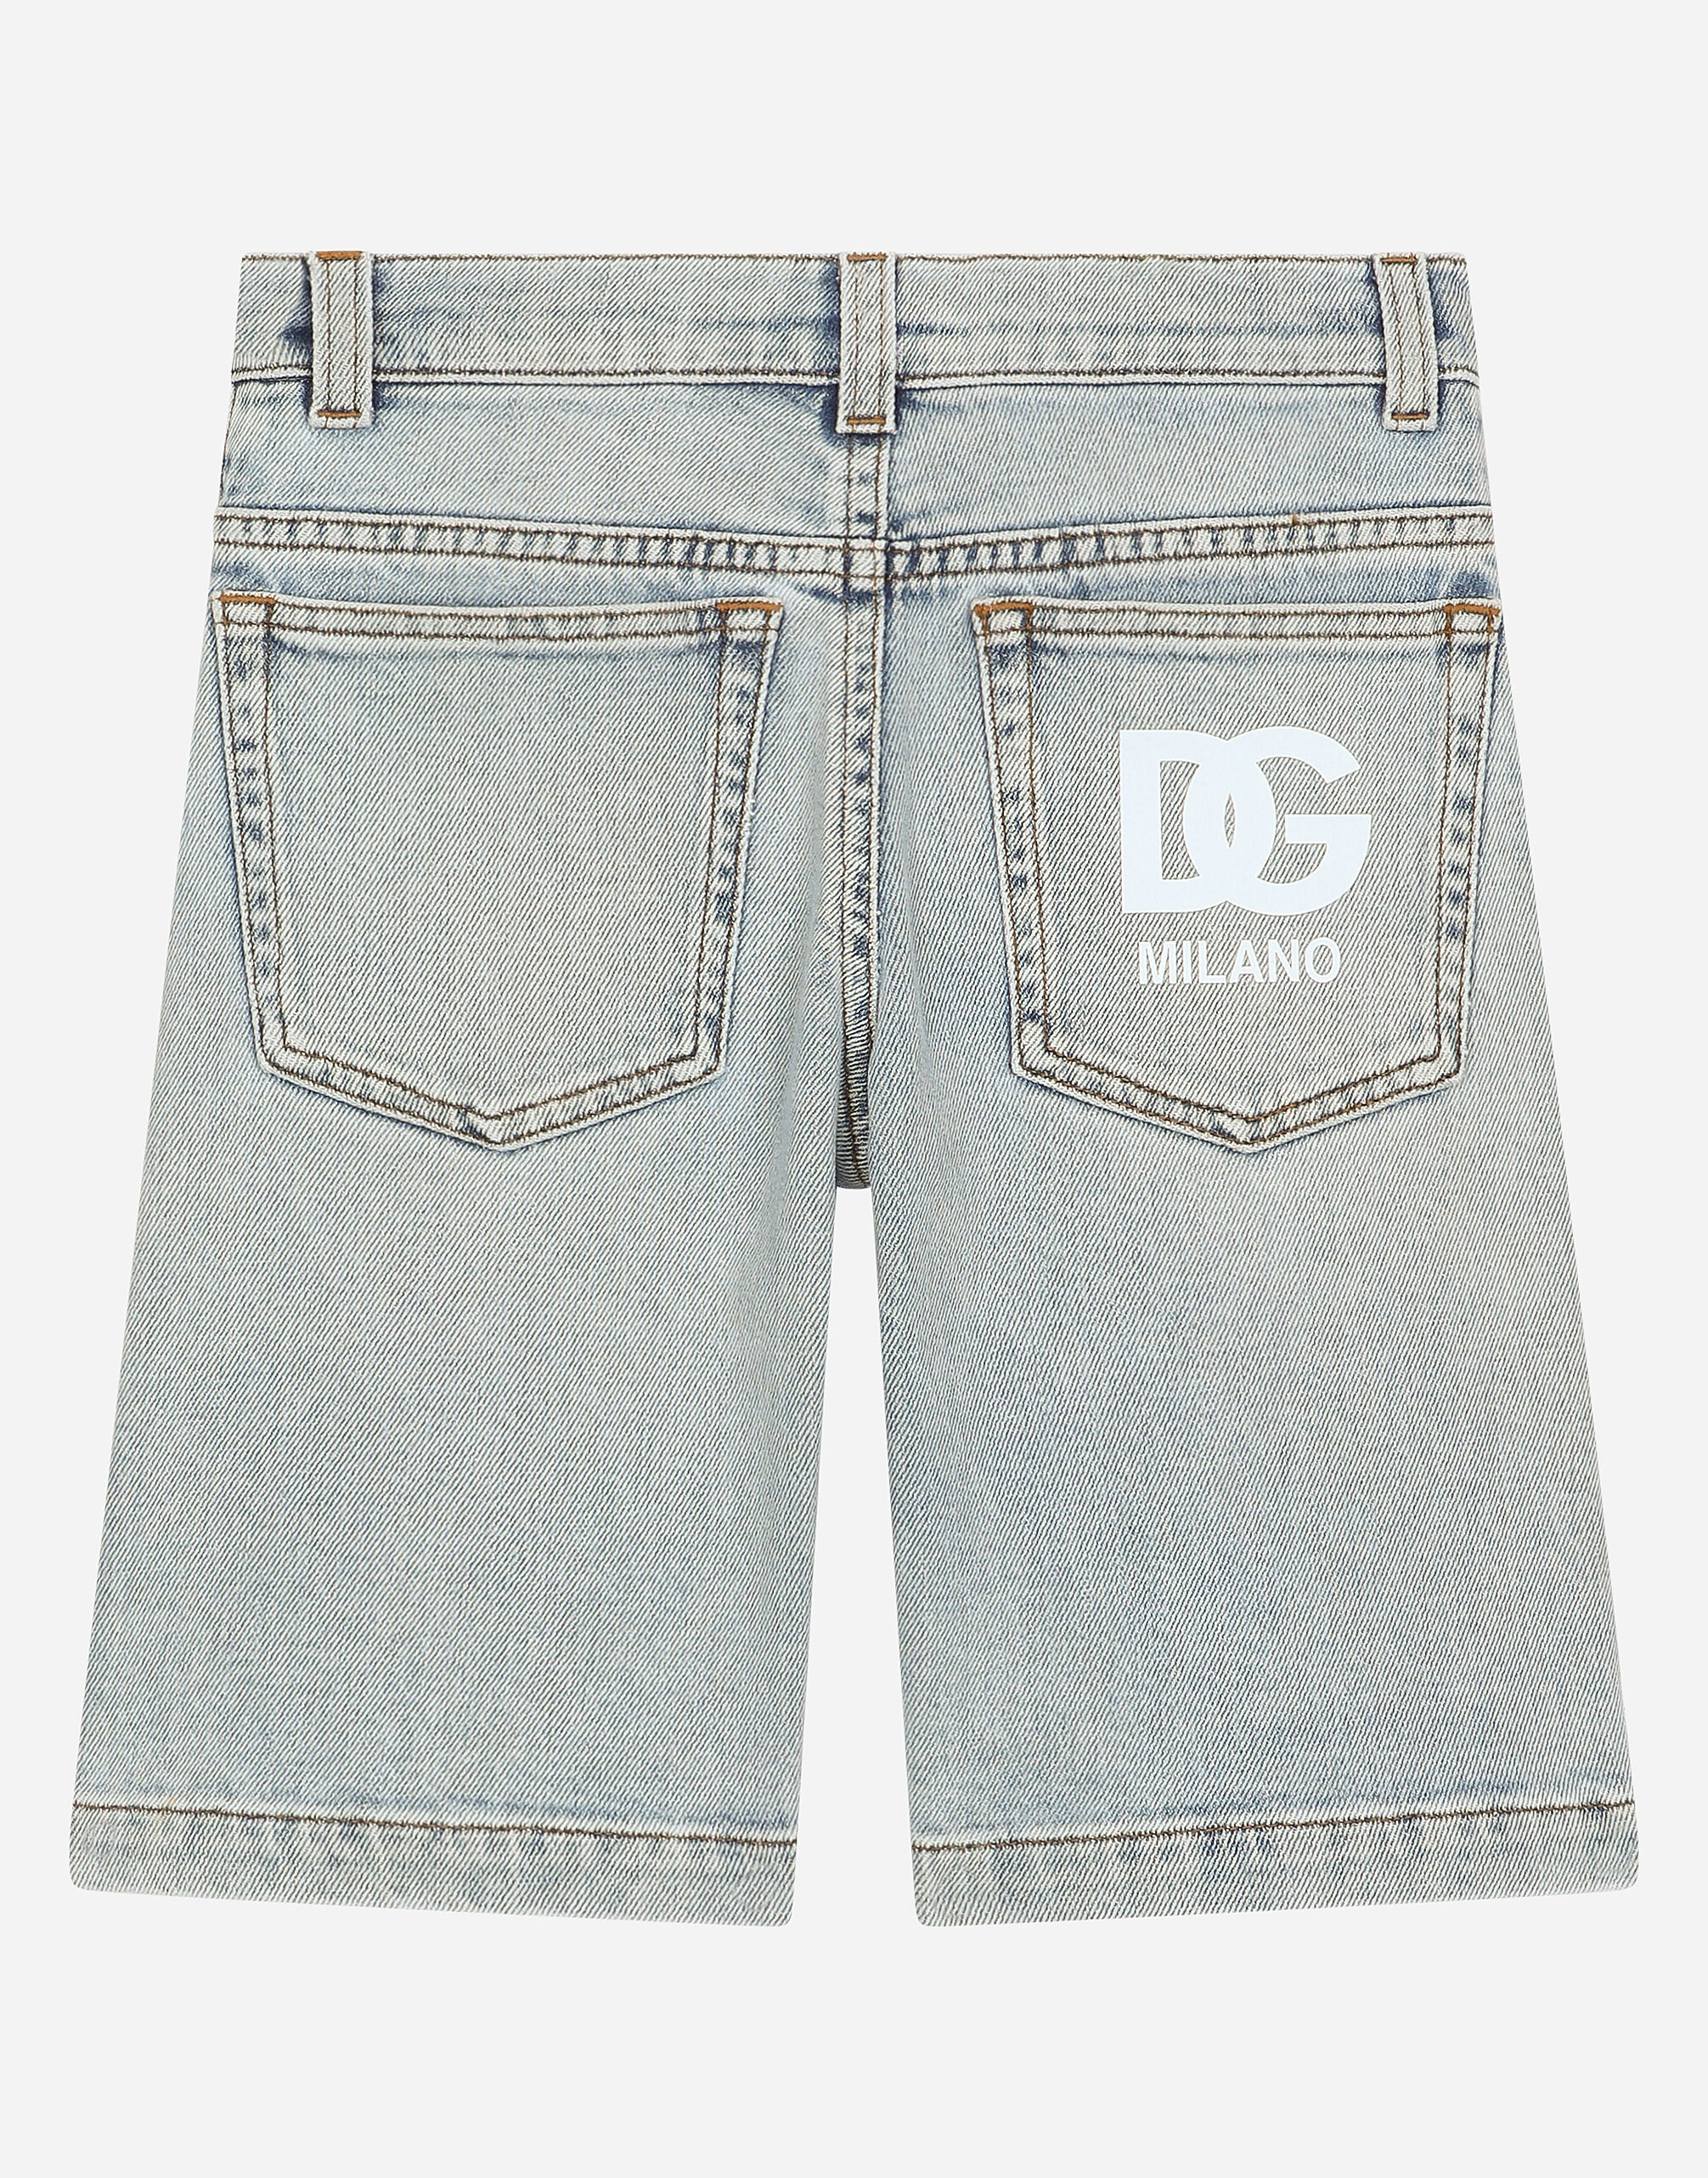 Dolce & Gabbana 5-pocket denim shorts with DG logo male Blue